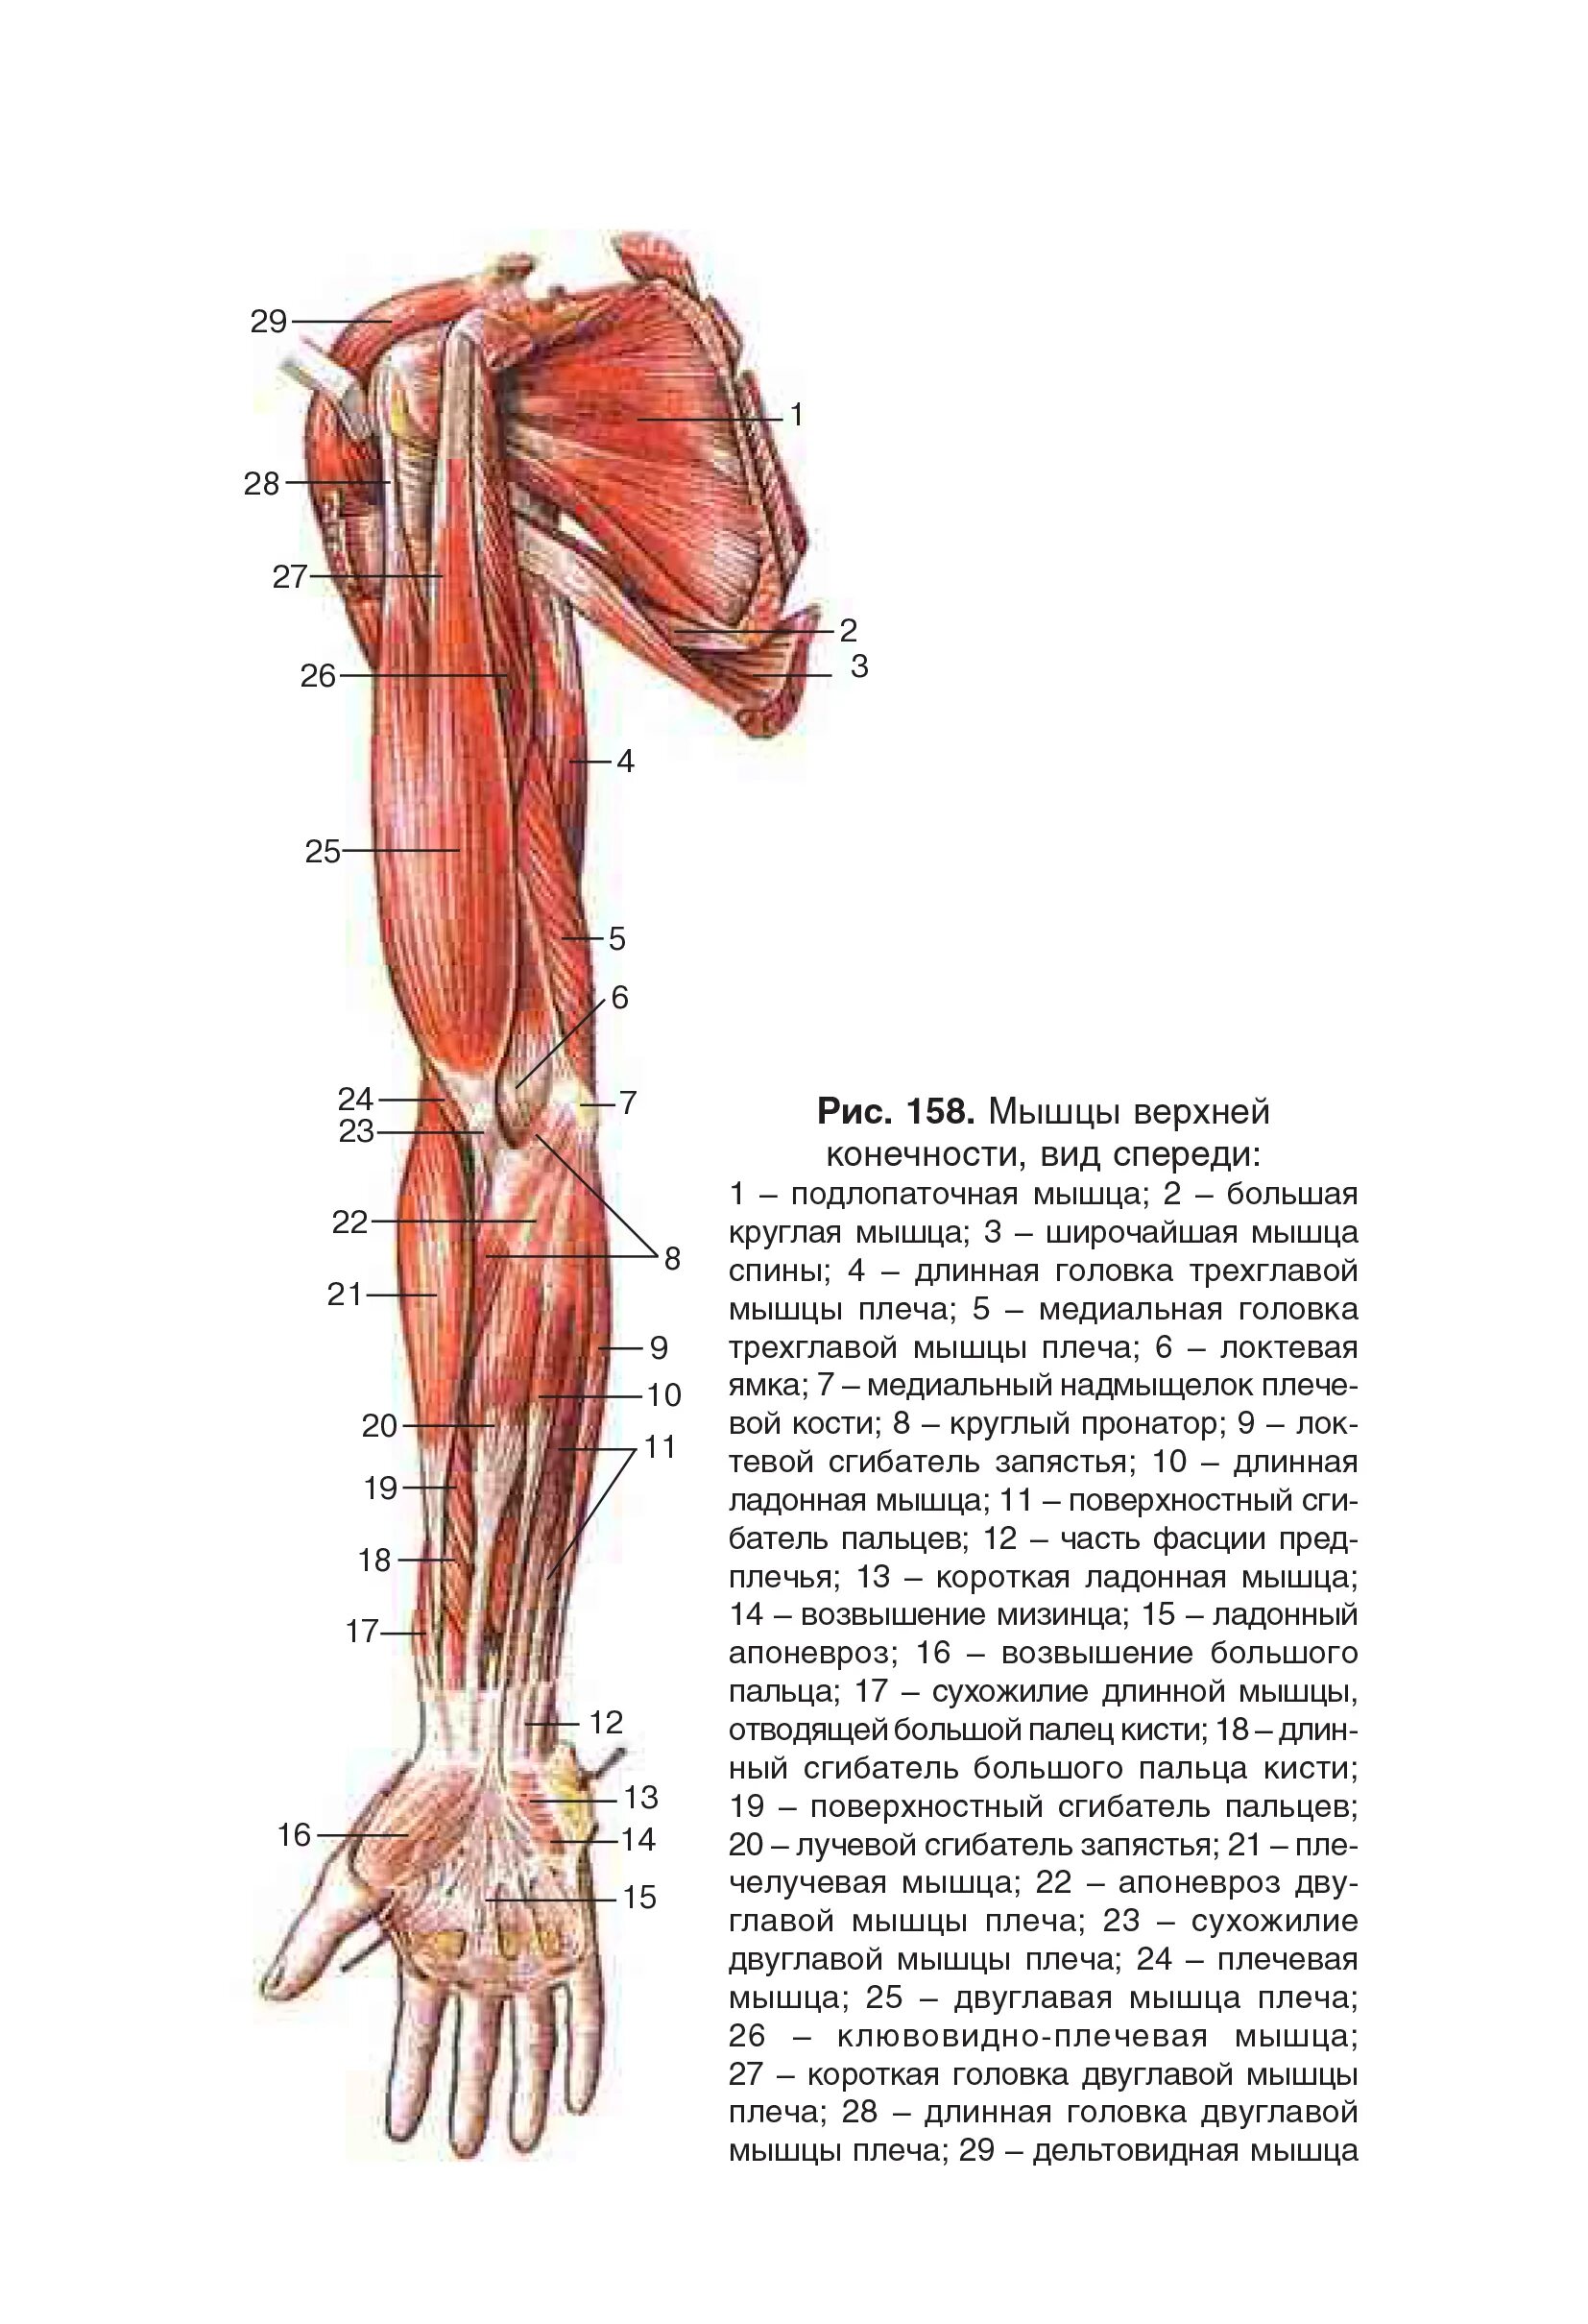 Анатомия мышц рук человека. Мышцы руки анатомия человека. Мышцы верхней конечности вид спереди. Анатомия руки человека кости и мышцы. Мышцы верхних конечностей анатомия рисунок.